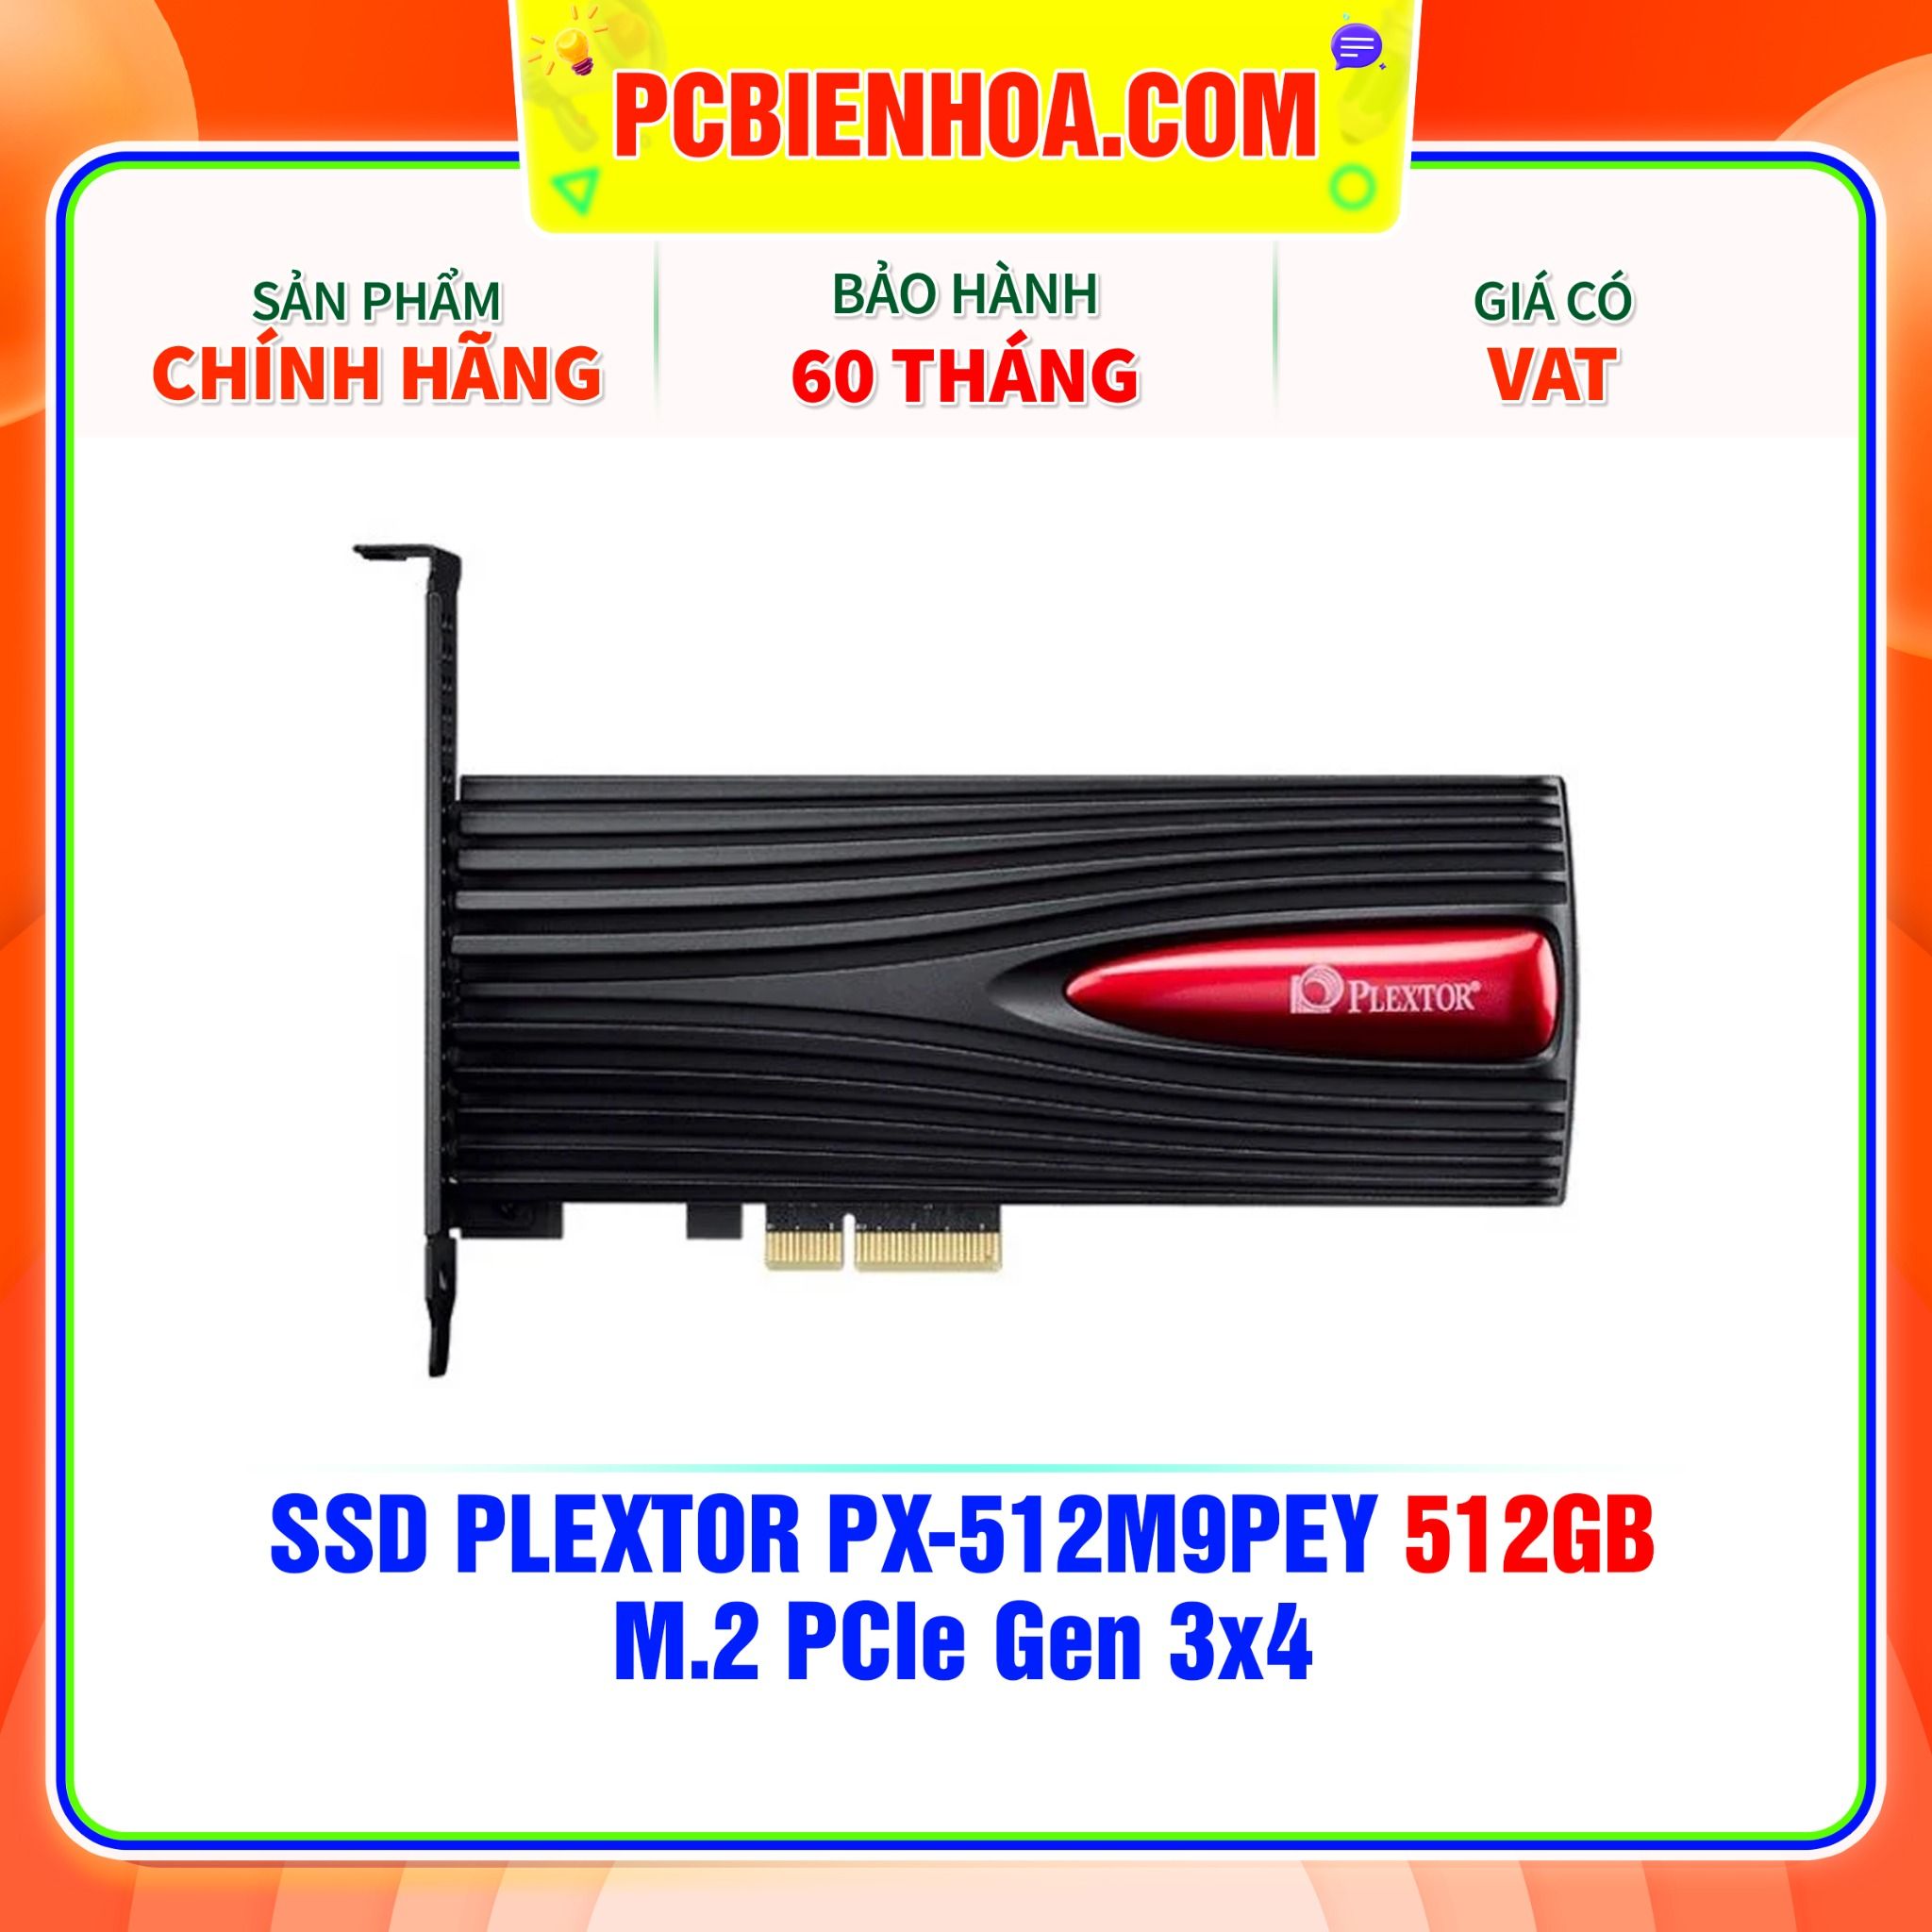  SSD PLEXTOR PX-512M9PEY 512GB - M.2 PCIe Gen 3x4 